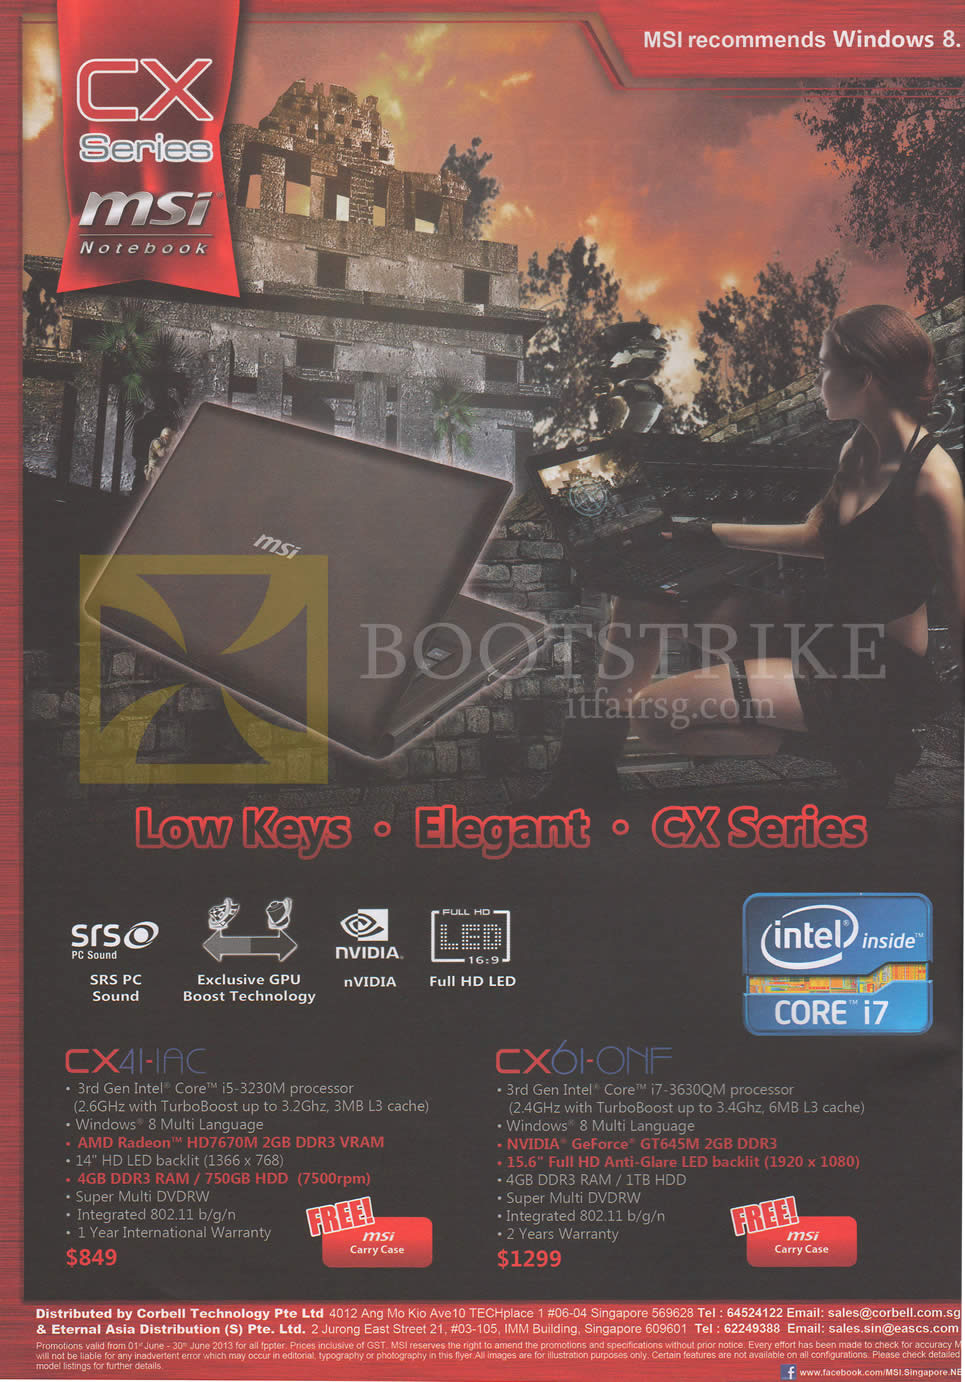 PC SHOW 2013 price list image brochure of MSI Notebooks CX41-IAC, CX61-0NF